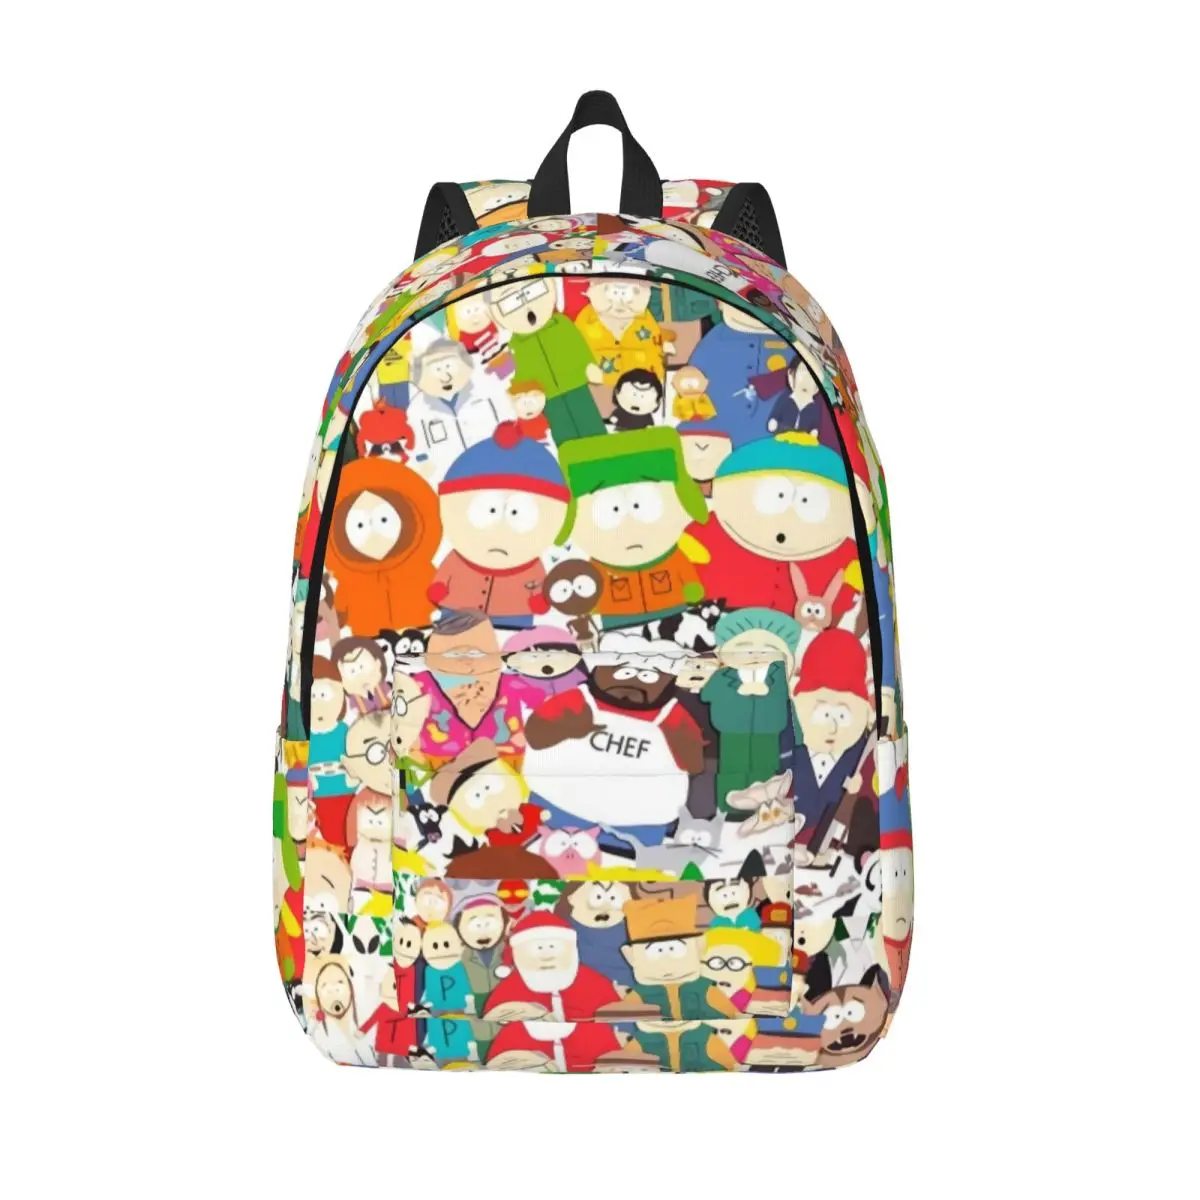 

South-Park All Characters Backpack for Preschool Kindergarten School Student Vintage Book Bags Boy Girl Kids Canvas Daypack